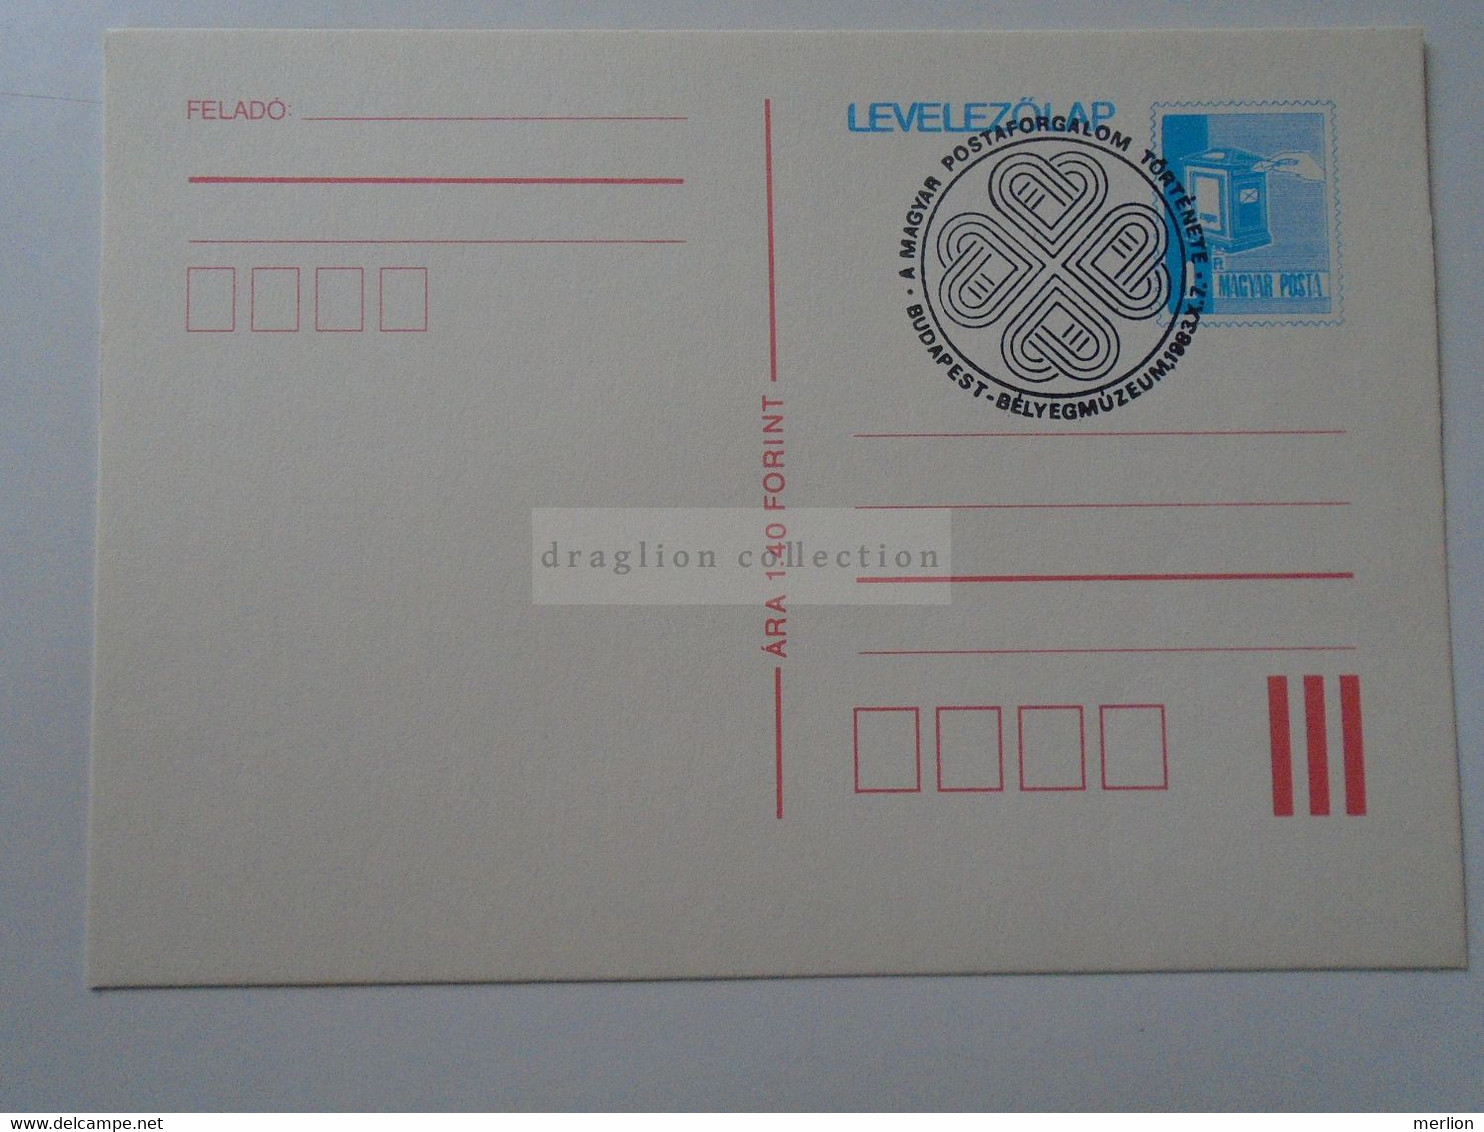 D187099  HUNGARY- Stationery - Postmark  MAGYAR POSTA   - Hungarian Post - Bélyegmúzeum - Postatörténet  1983 BP - Storia Postale